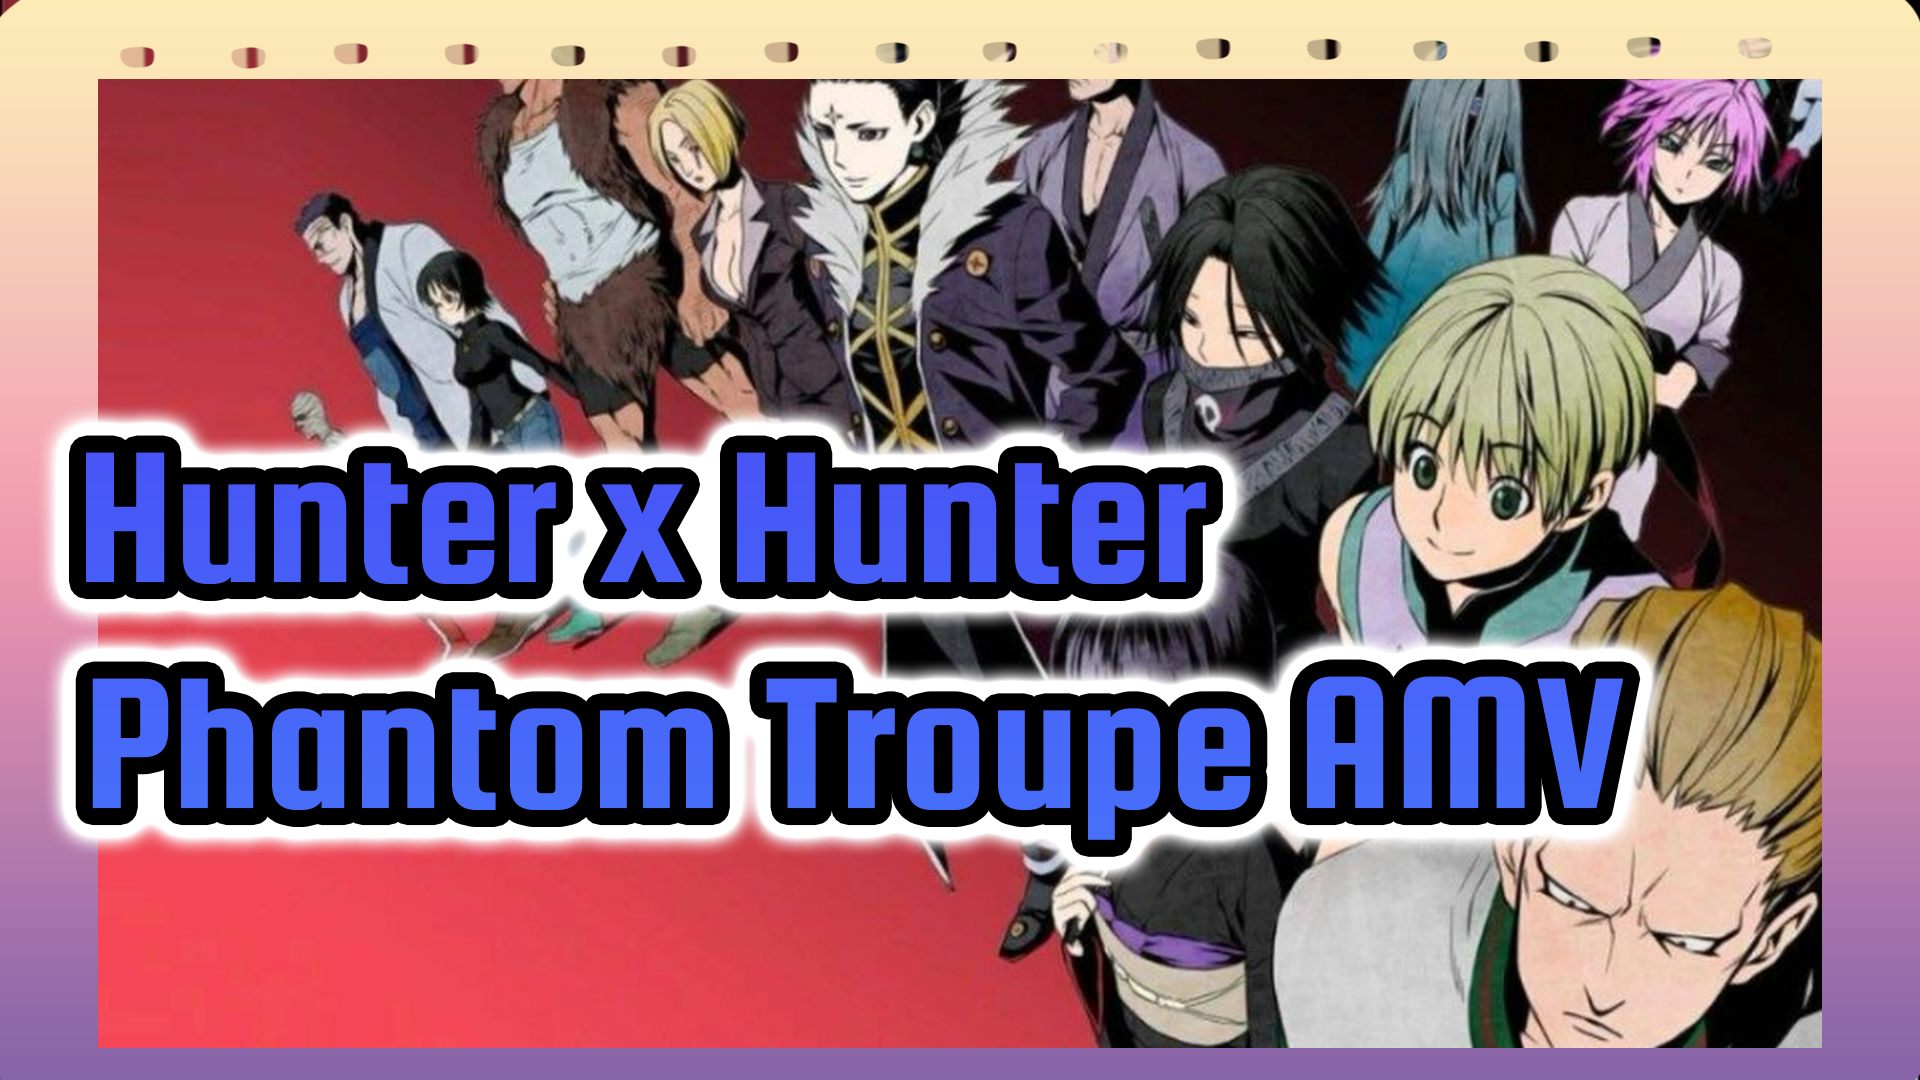 phantom troupe  Hunter x Hunter Wallpaper 44779049  Fanpop